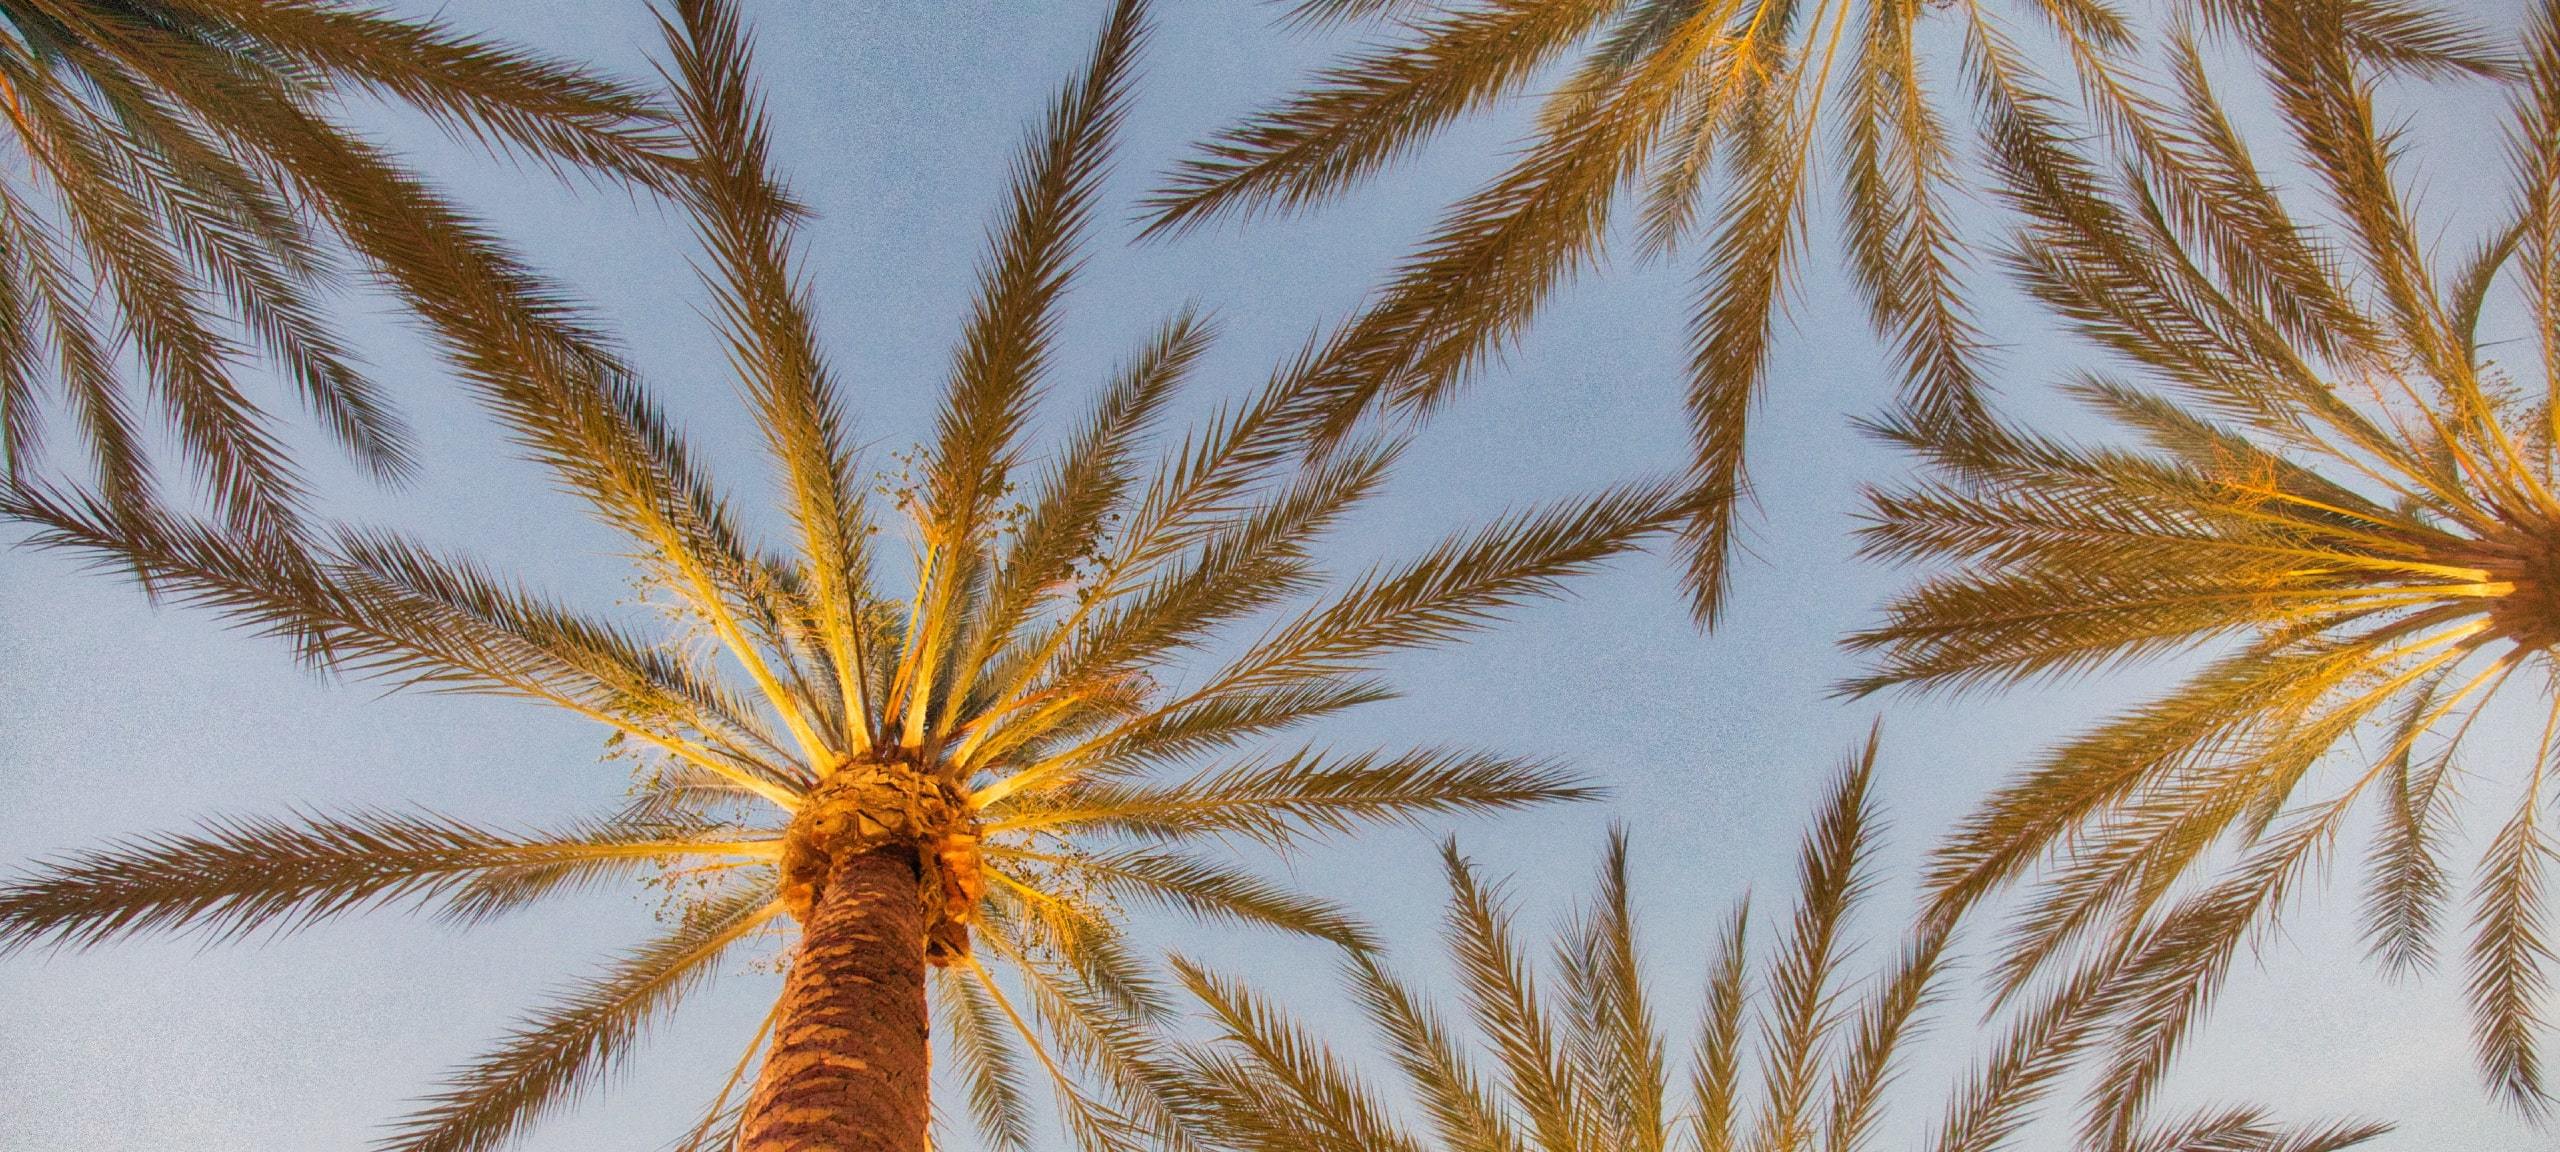 Upwards view of Irvine, CA palm trees